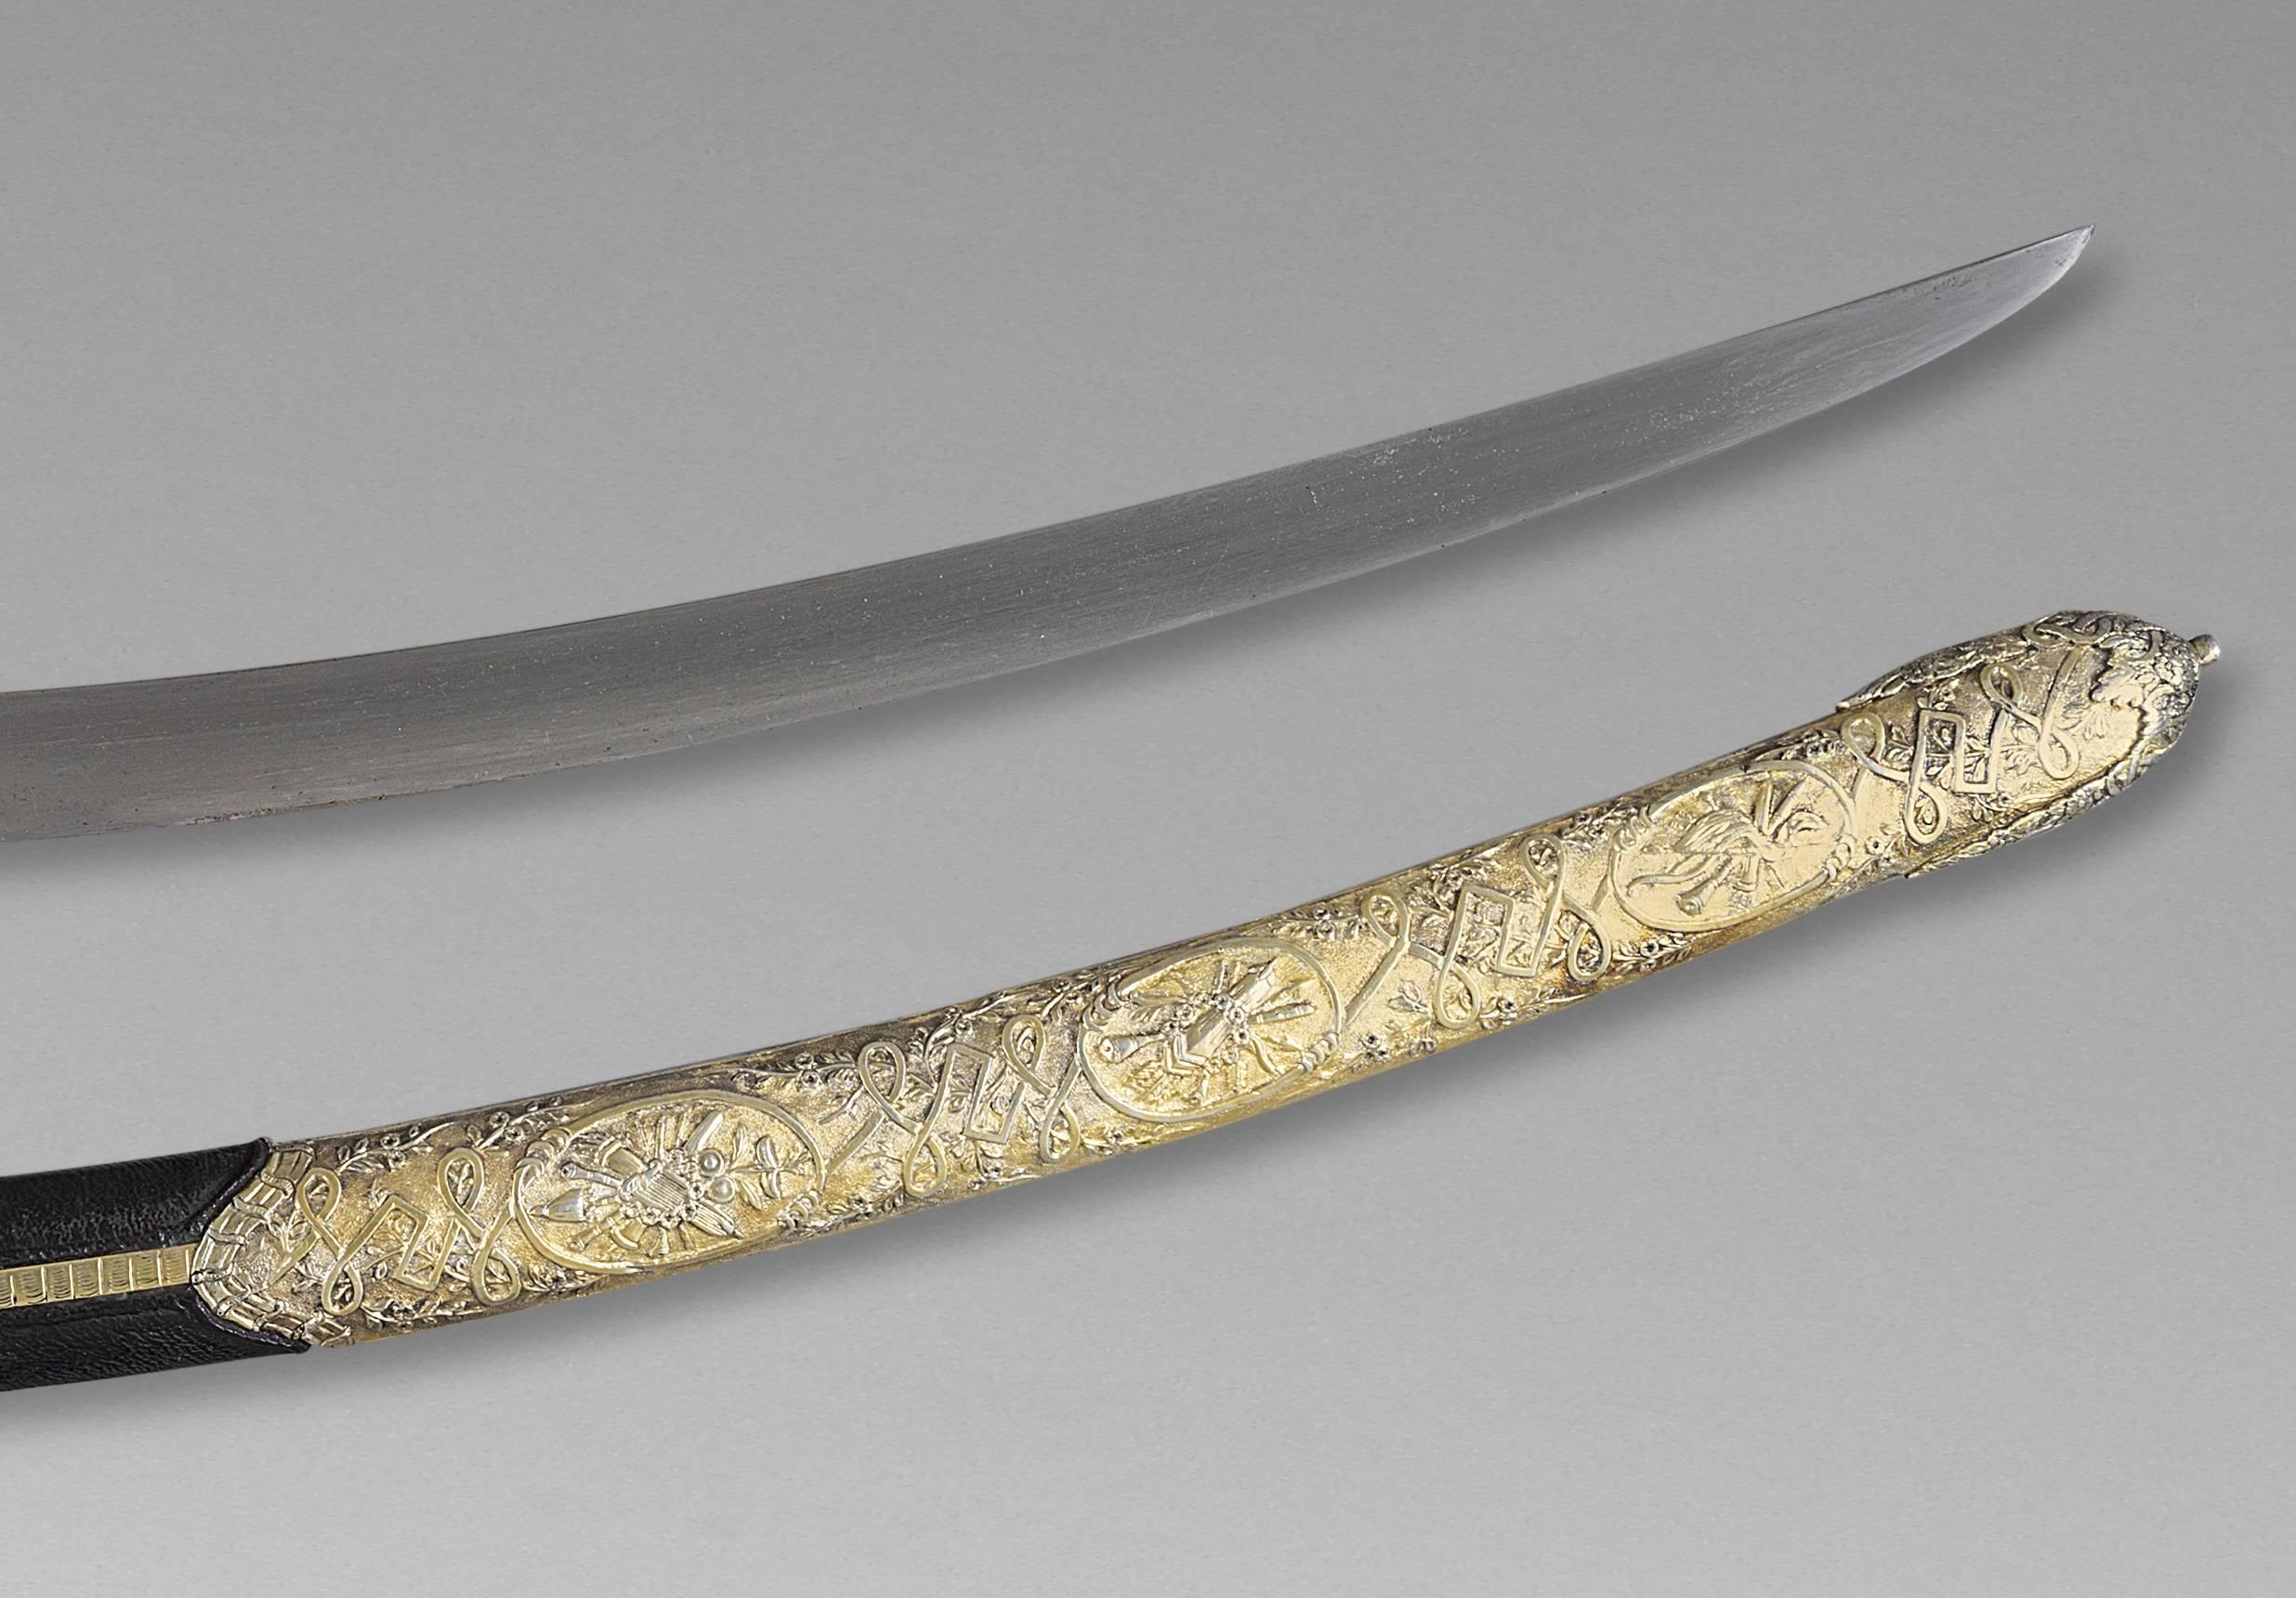 18th century saber